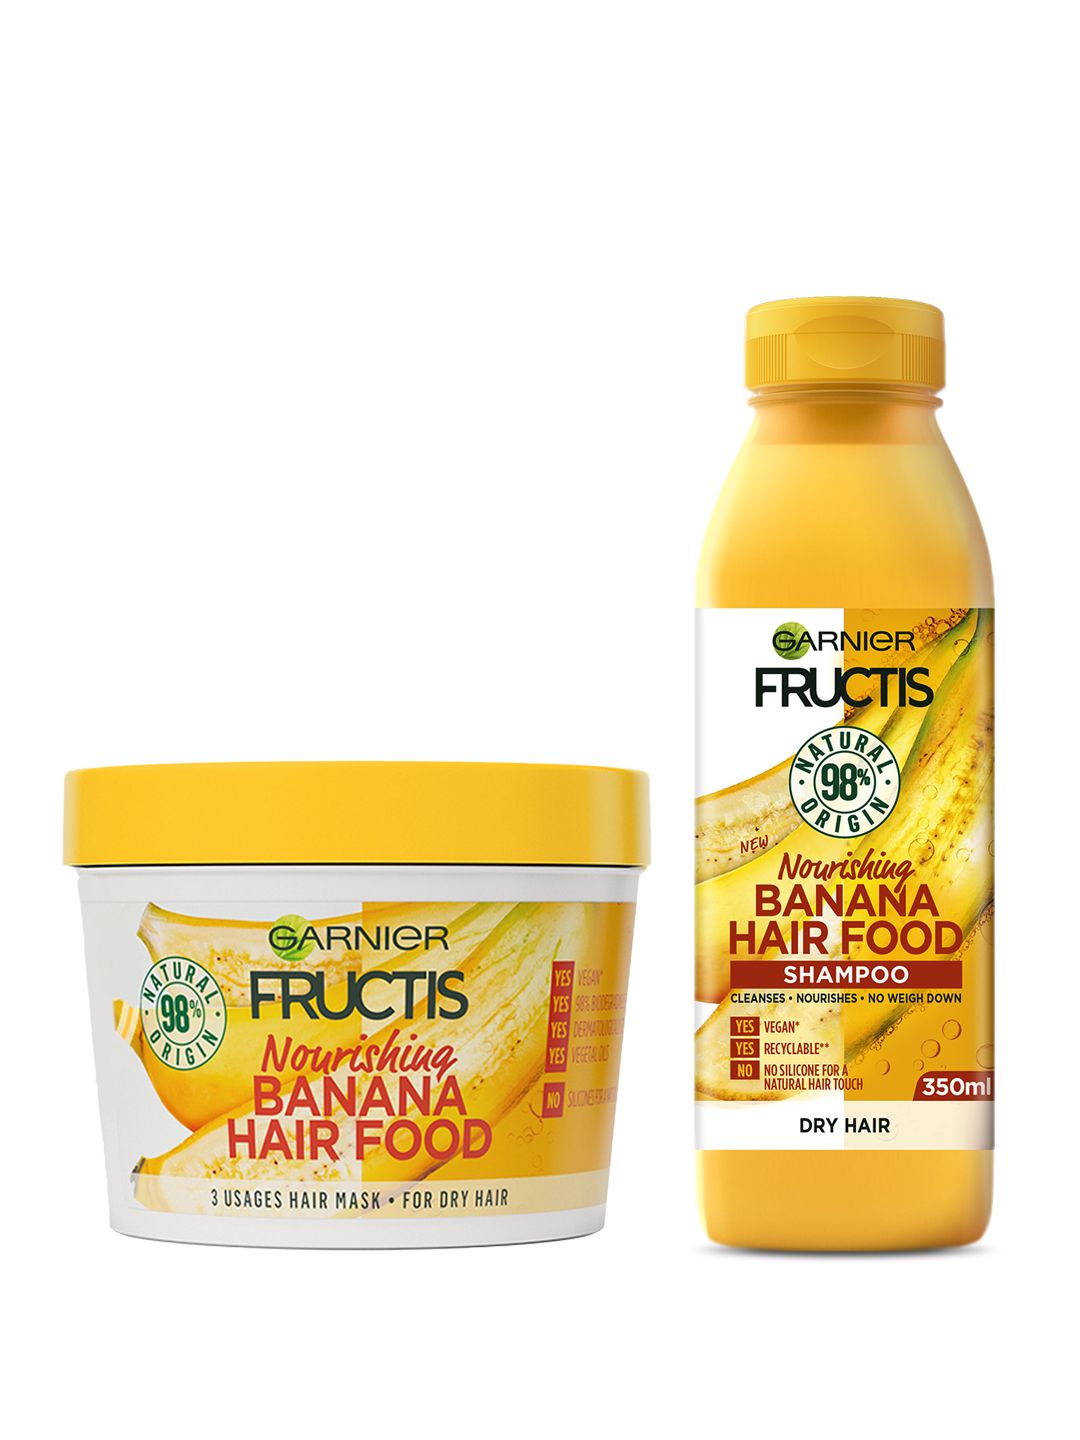 Garnier Fructis Hair Food - Nourishing Banana Shampoo & Hair Mask Combo - 390ml + 350ml Price in India